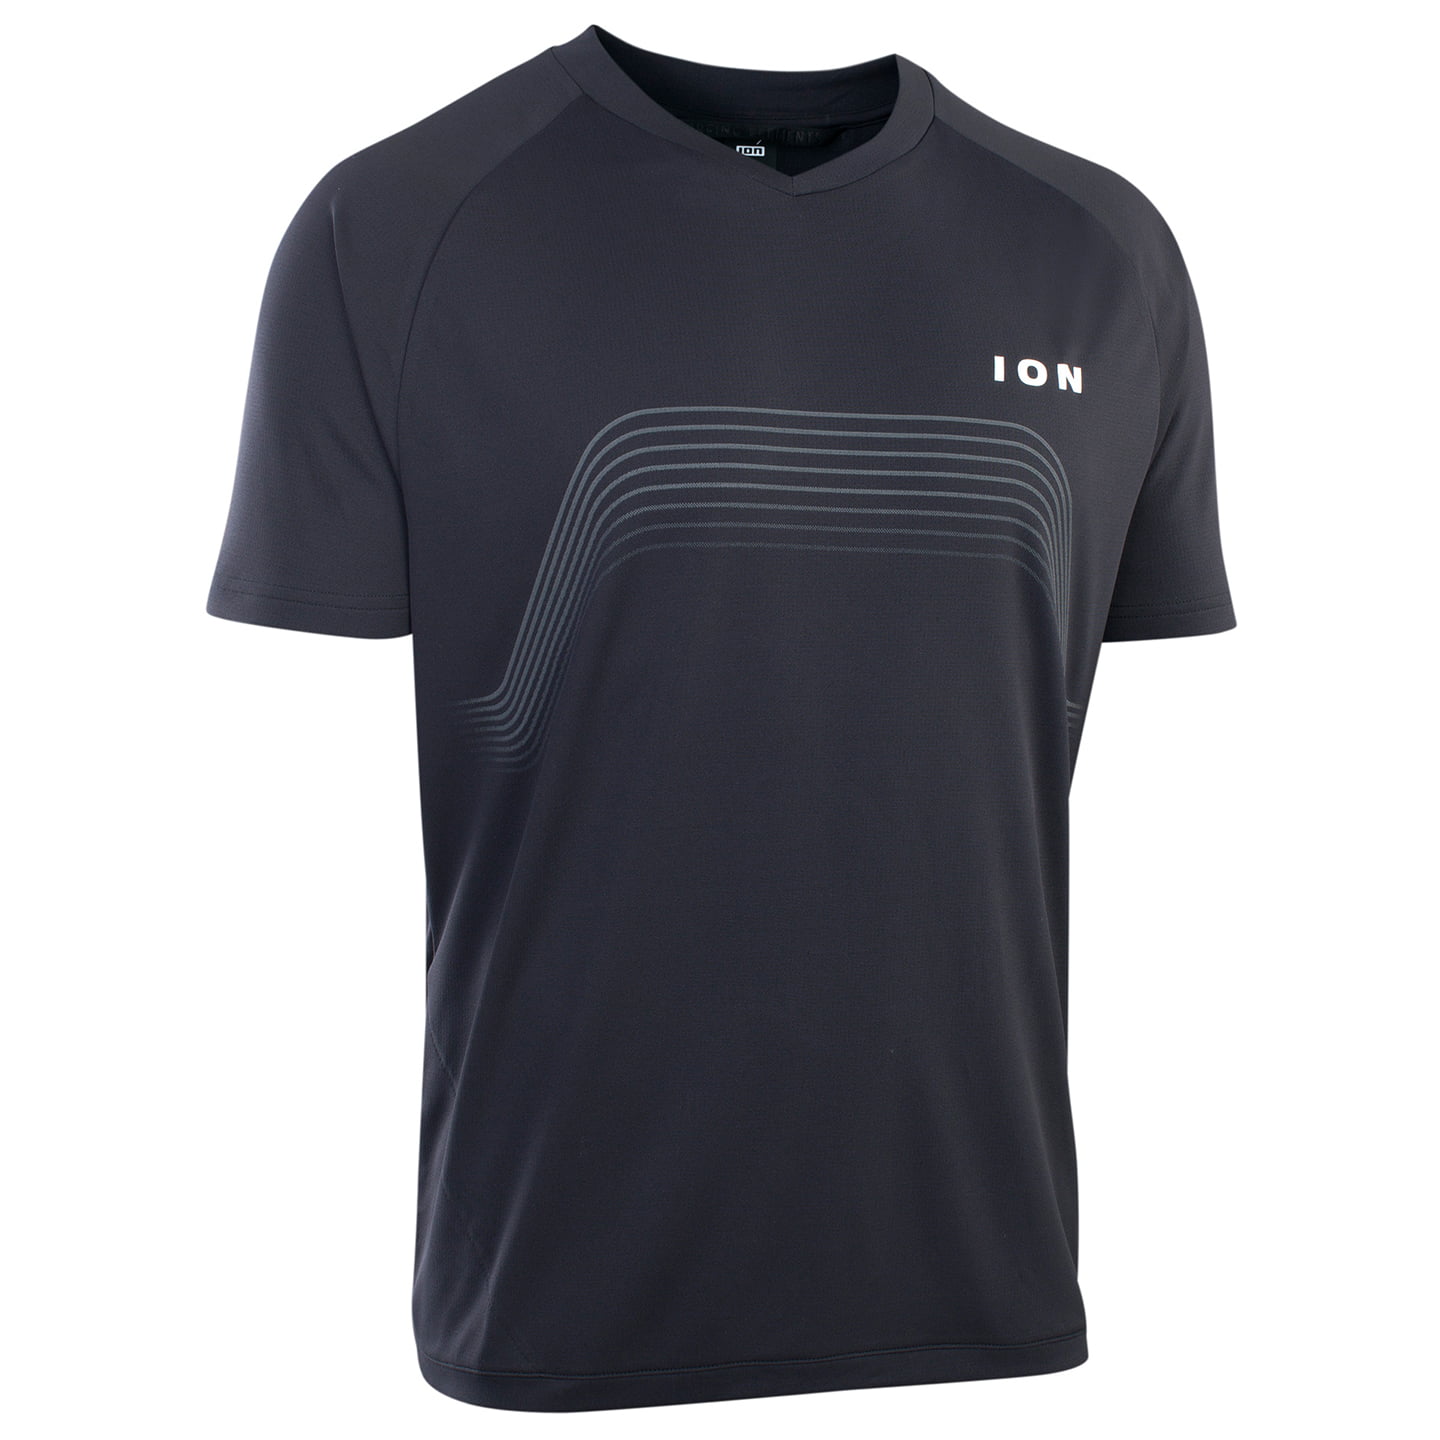 ION Traze Bike Shirt, for men, size XL, Cycling jersey, Cycle clothing